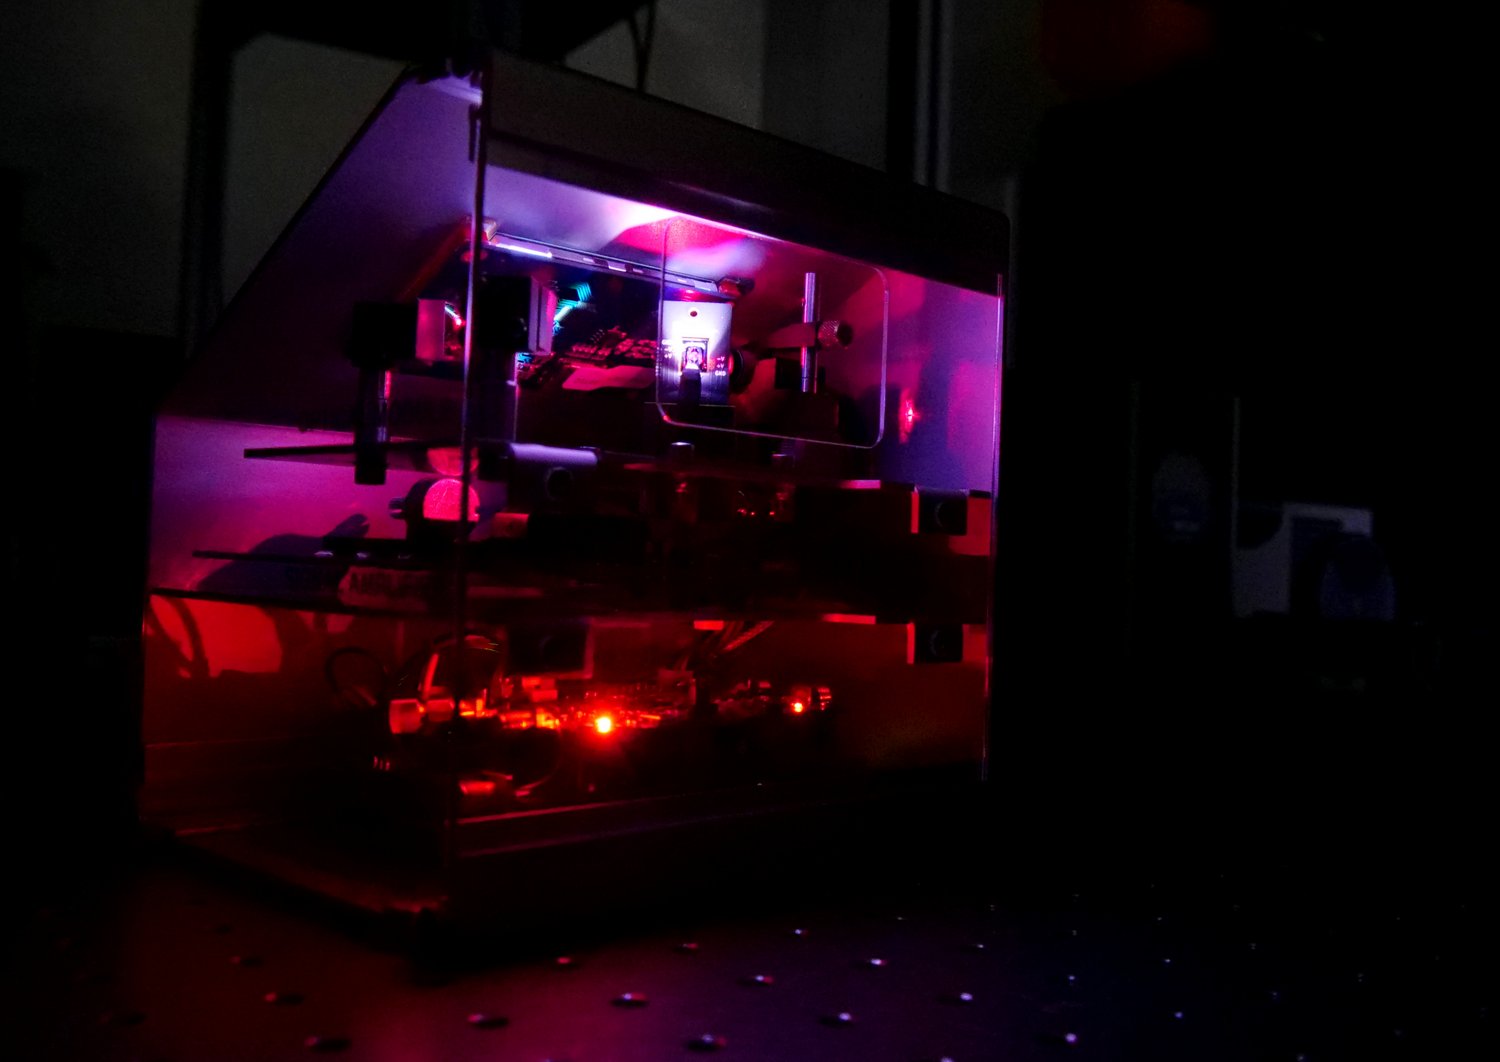 MEMS Mikrospiegel Labordemonstrator. Das Gerät leuchtet in Rot-Lila Farben